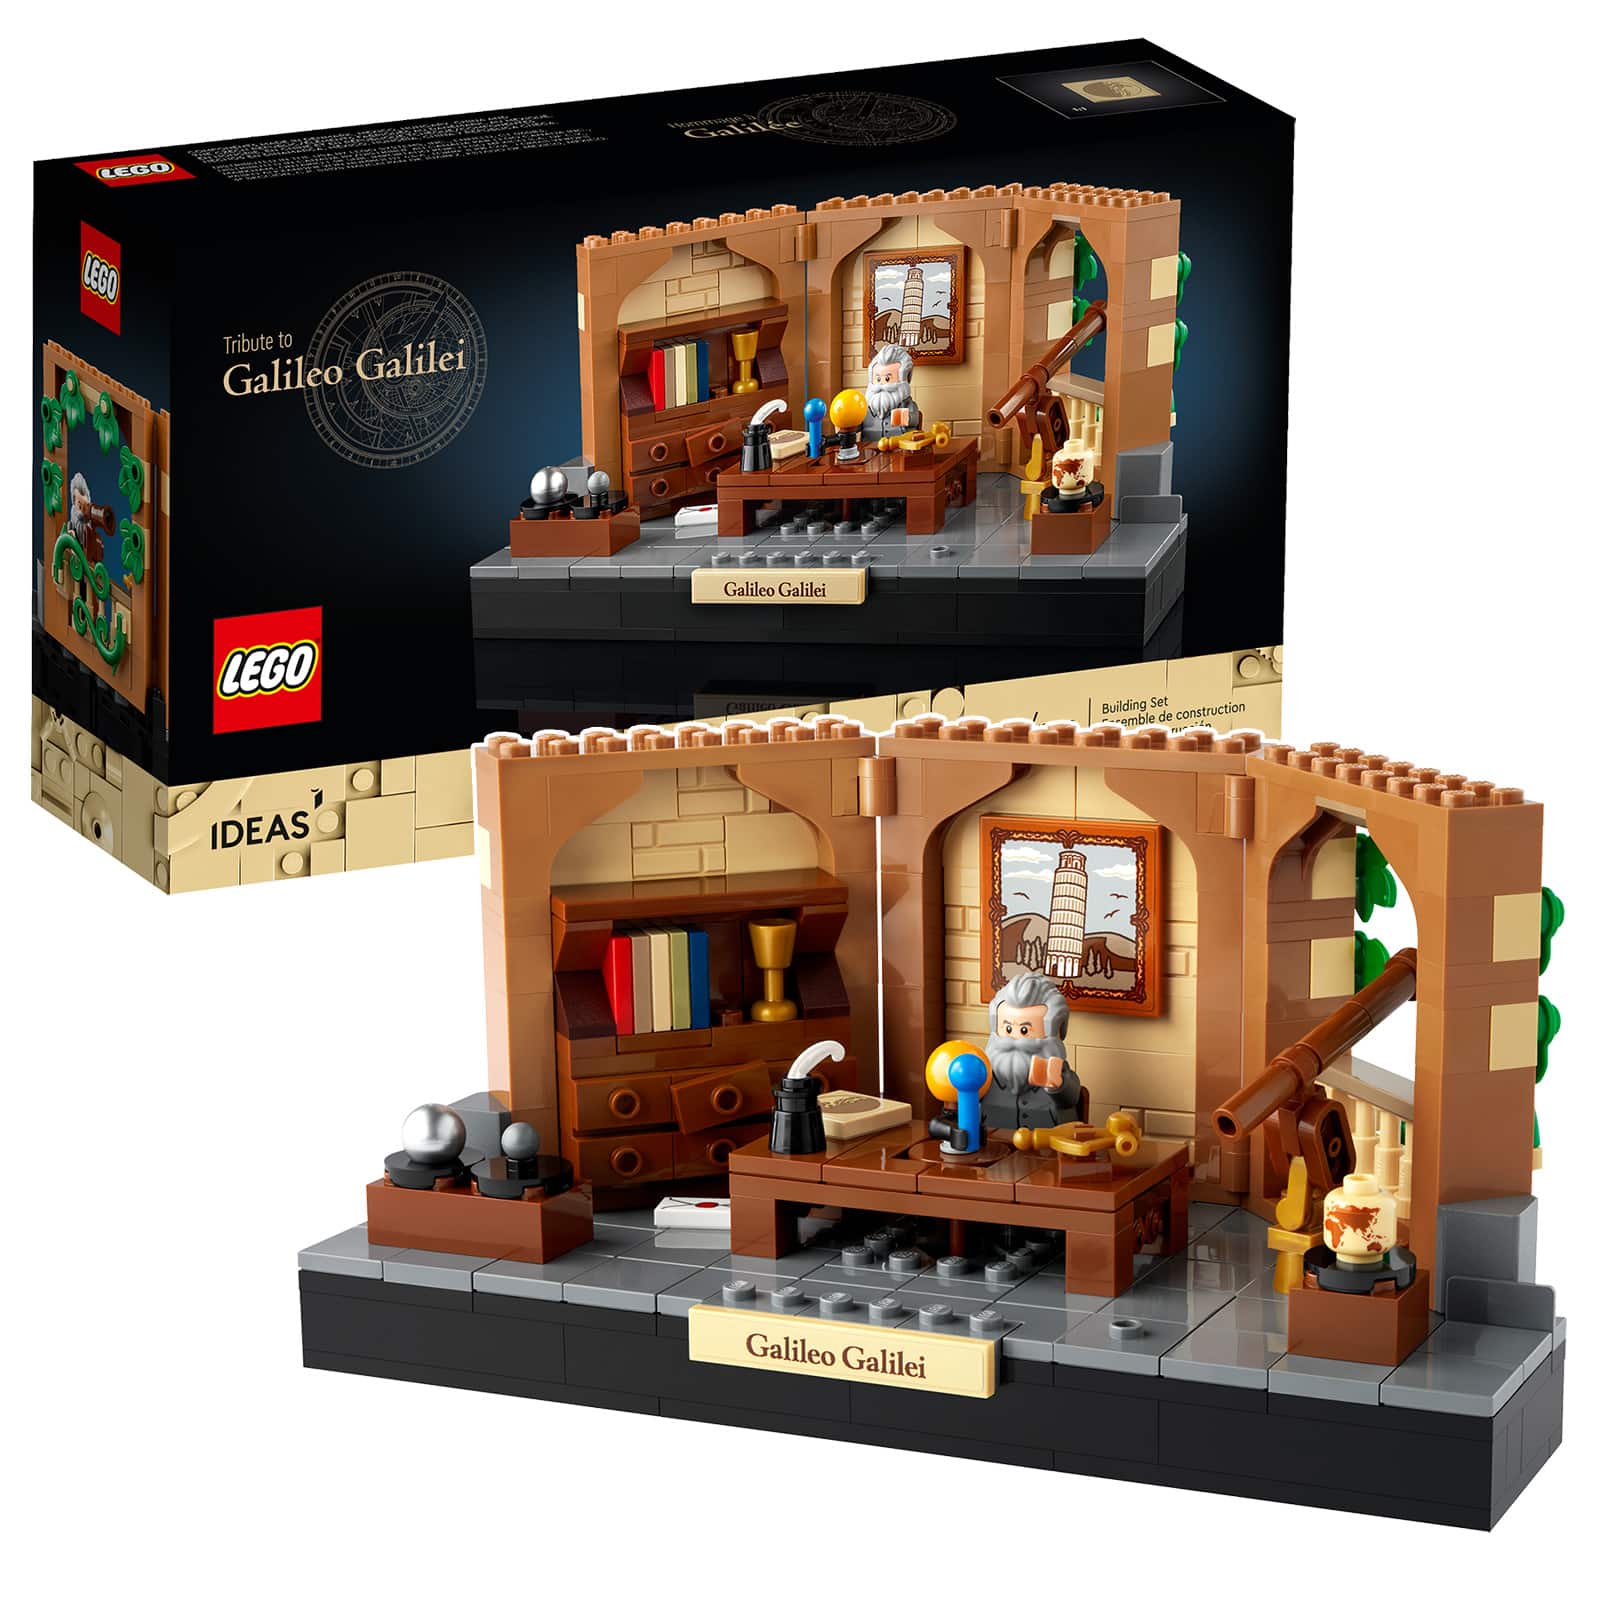 ▻ LEGO Ideas promotional set 40595 Tribute to Galileo Galilei